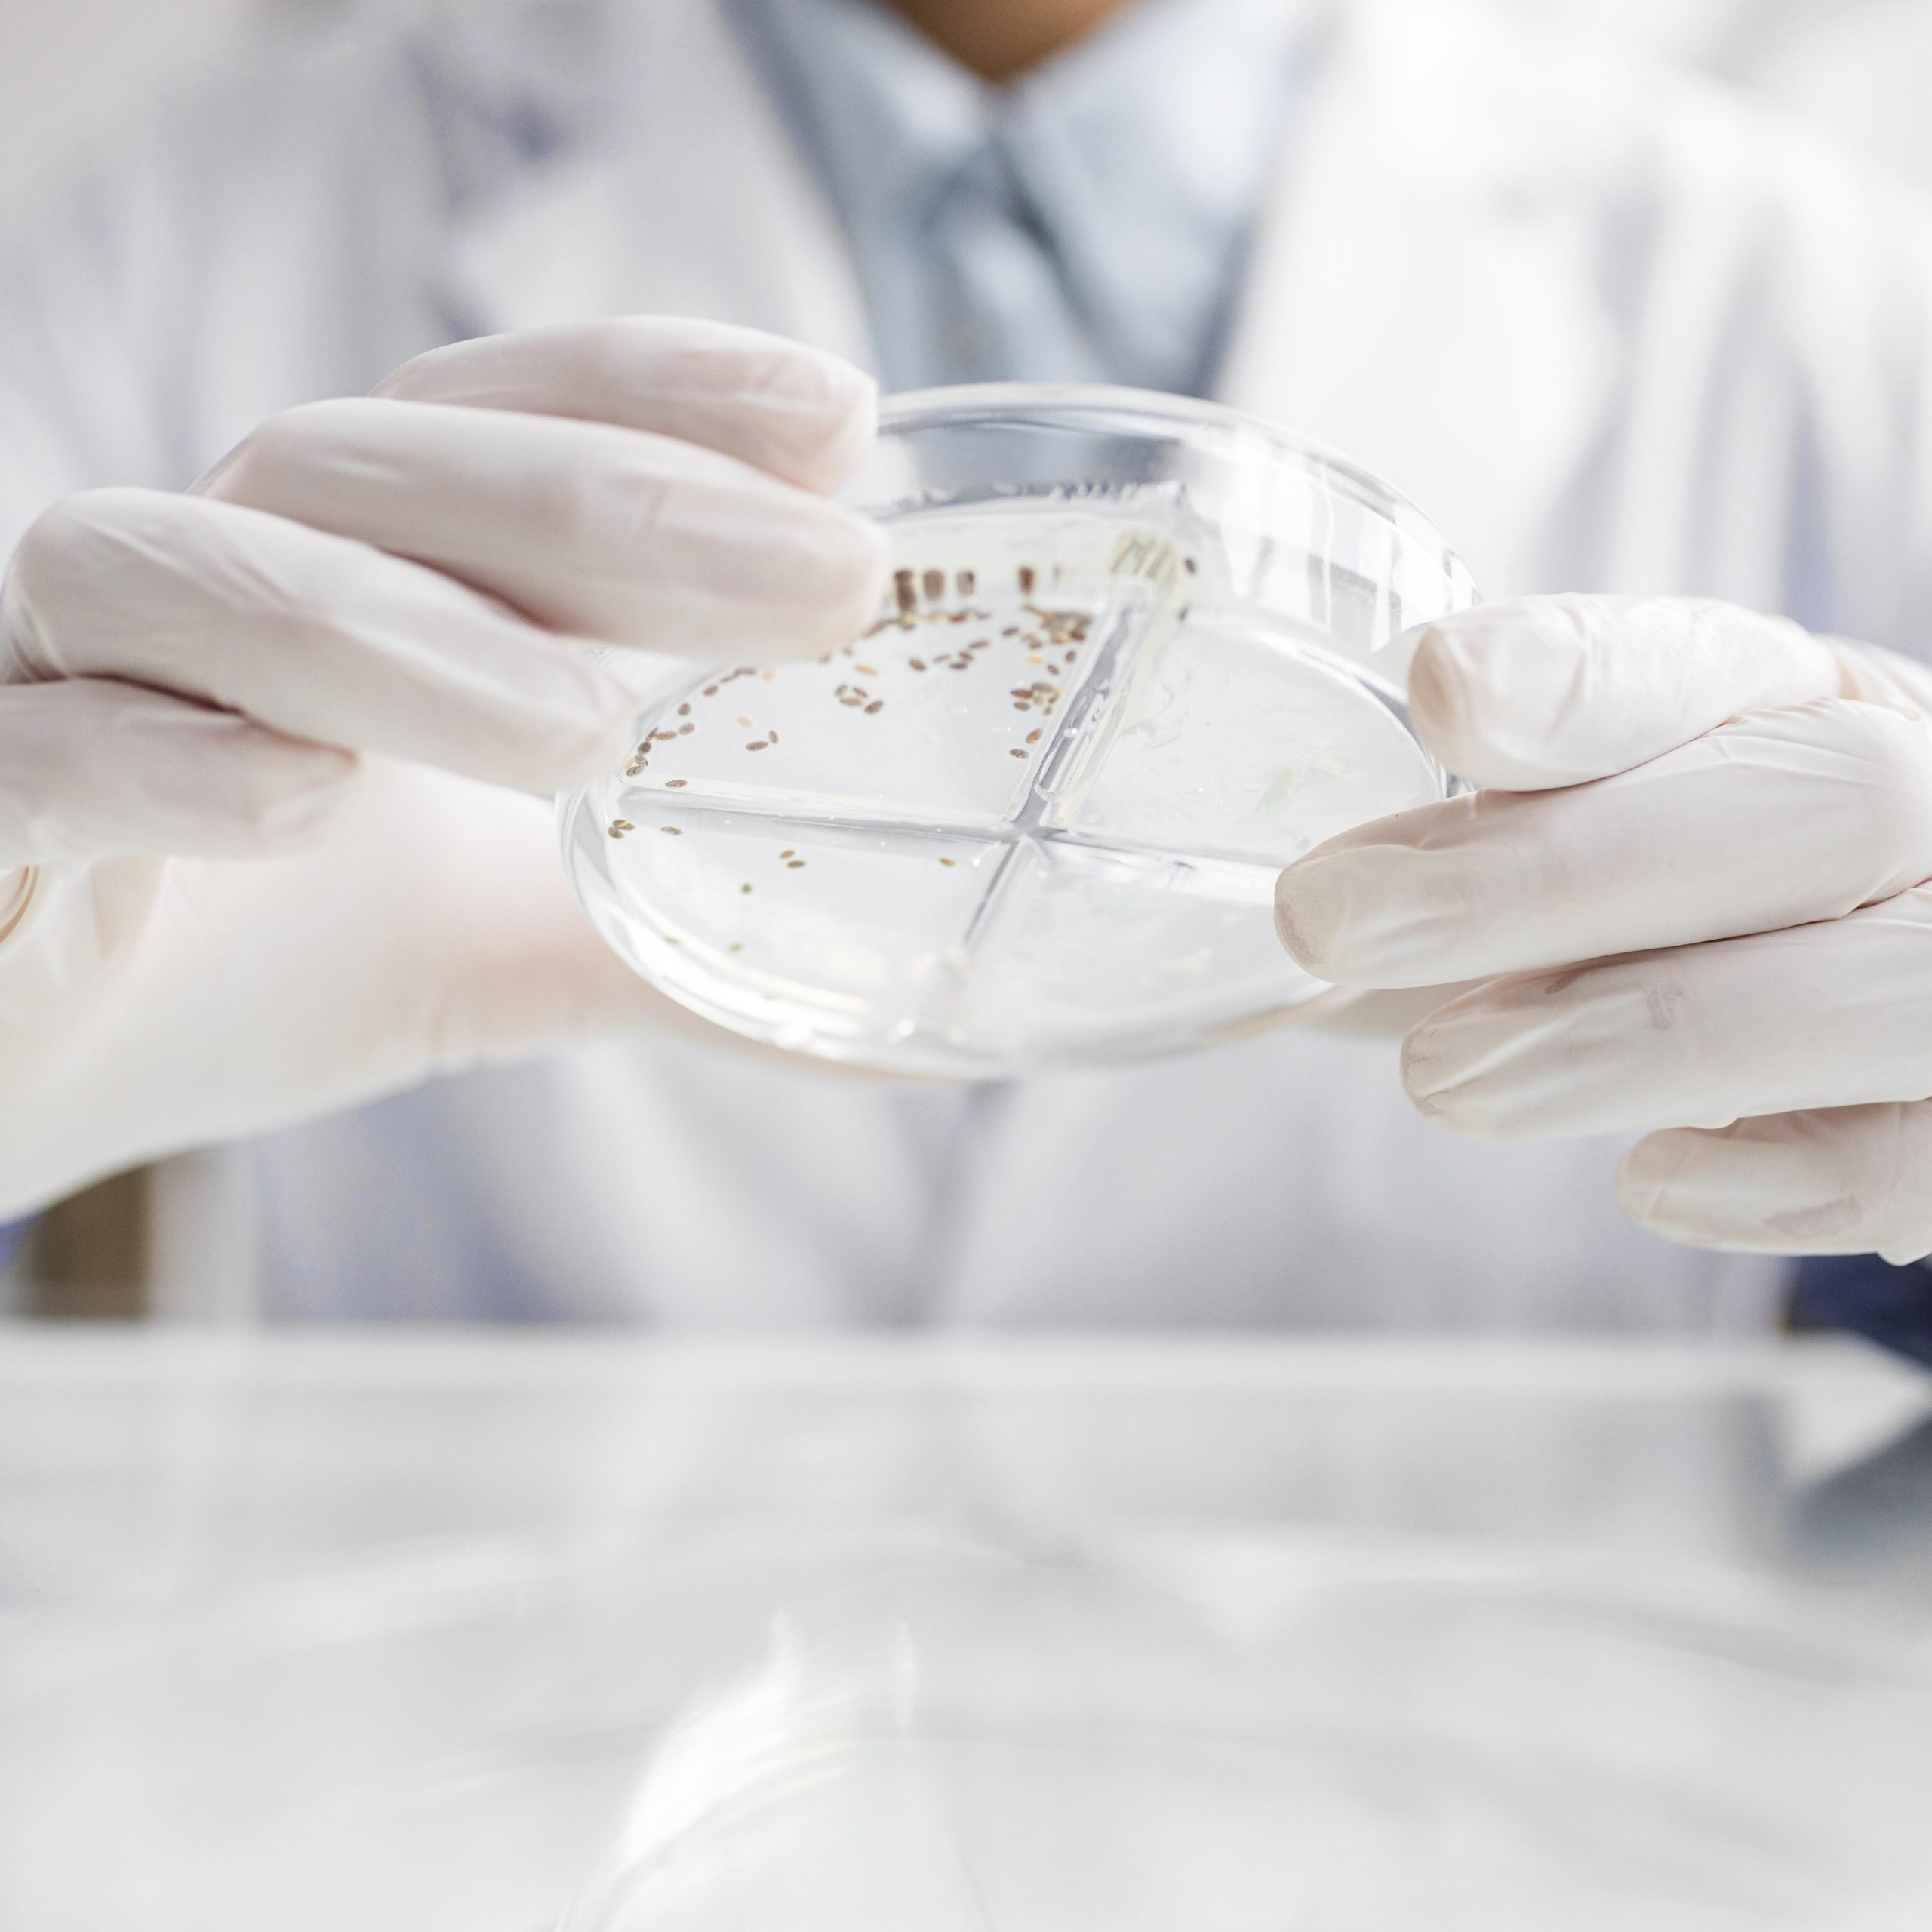 researcher-with-petri-dish-biotechnology-laboratory